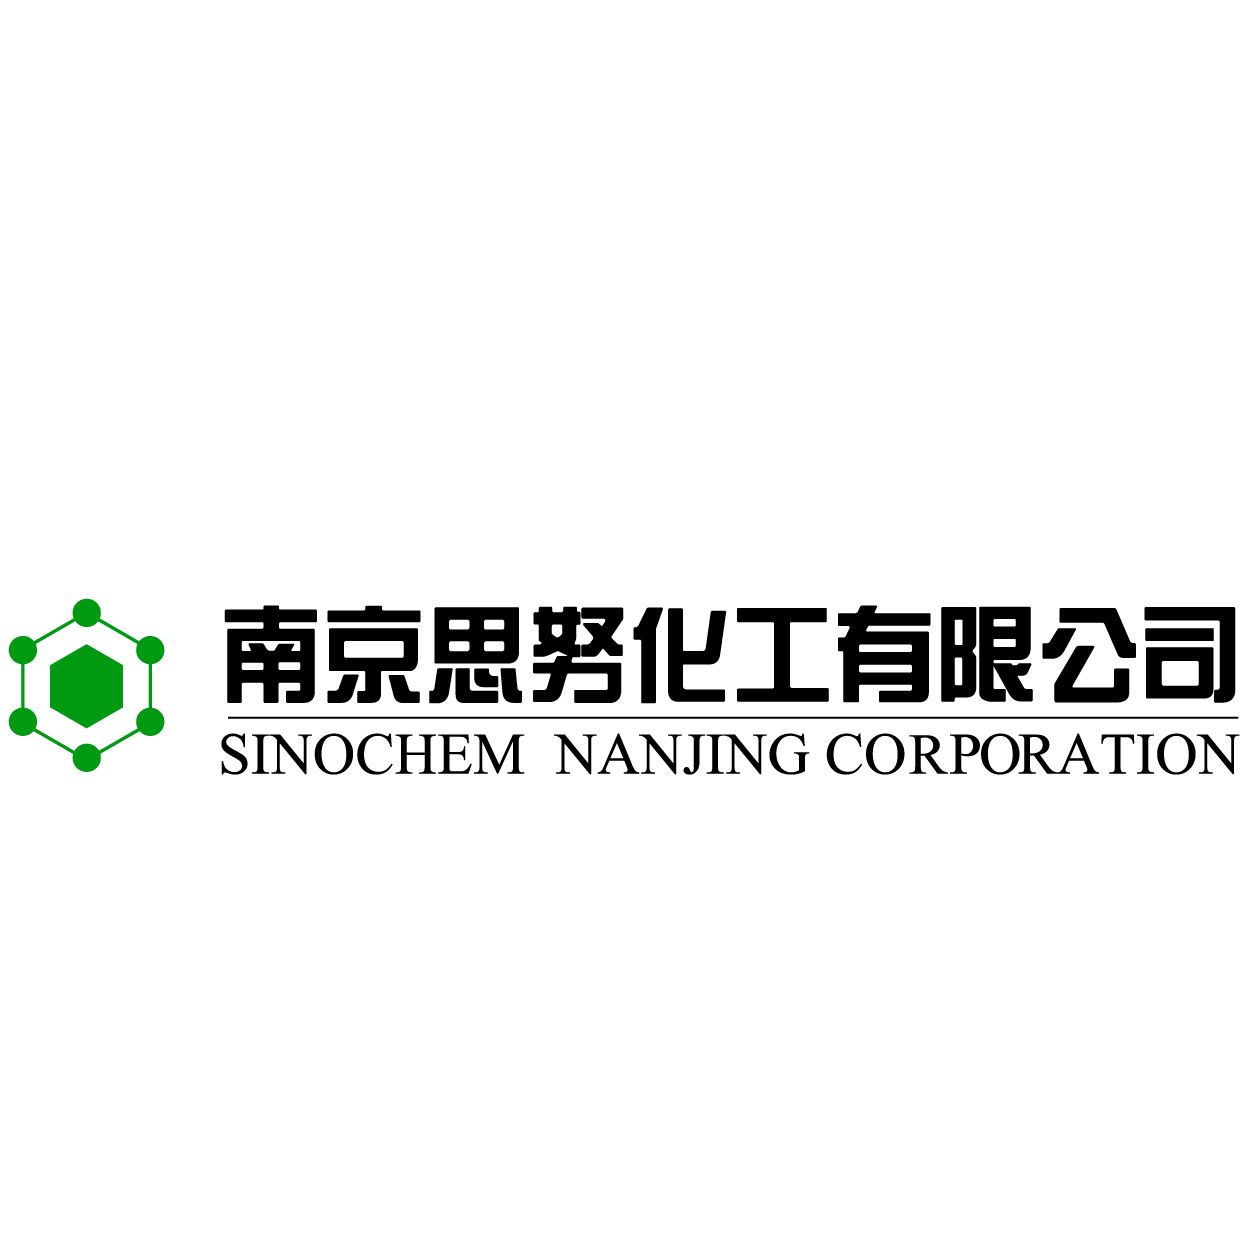 SINOCHEM NANJING CORPORATION logo